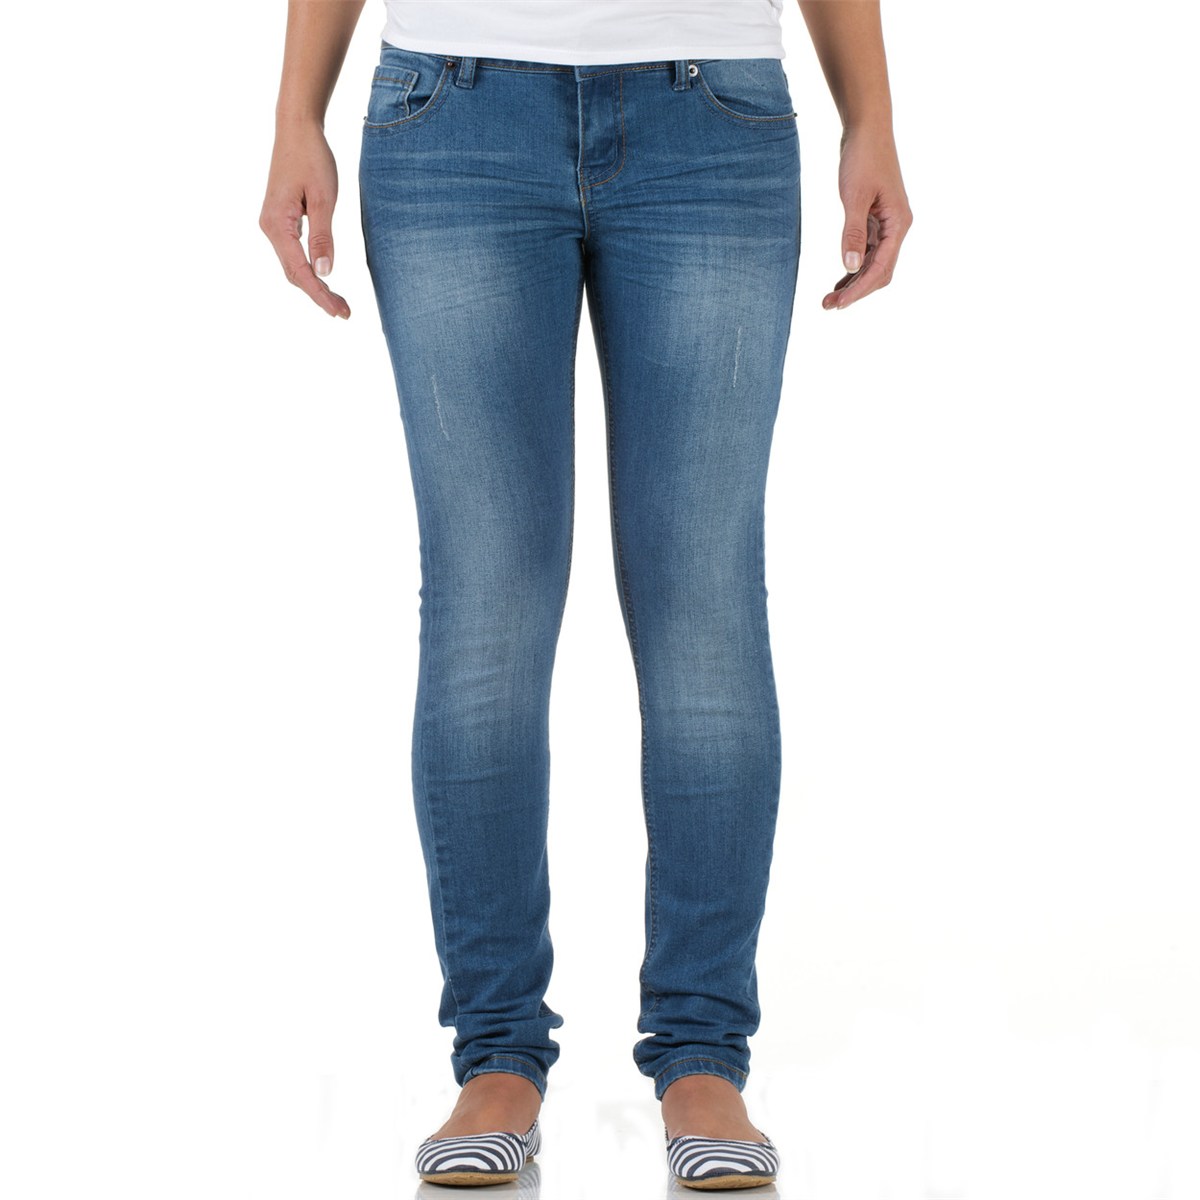 Fashion Gallery: Ladies Skinny Jeans